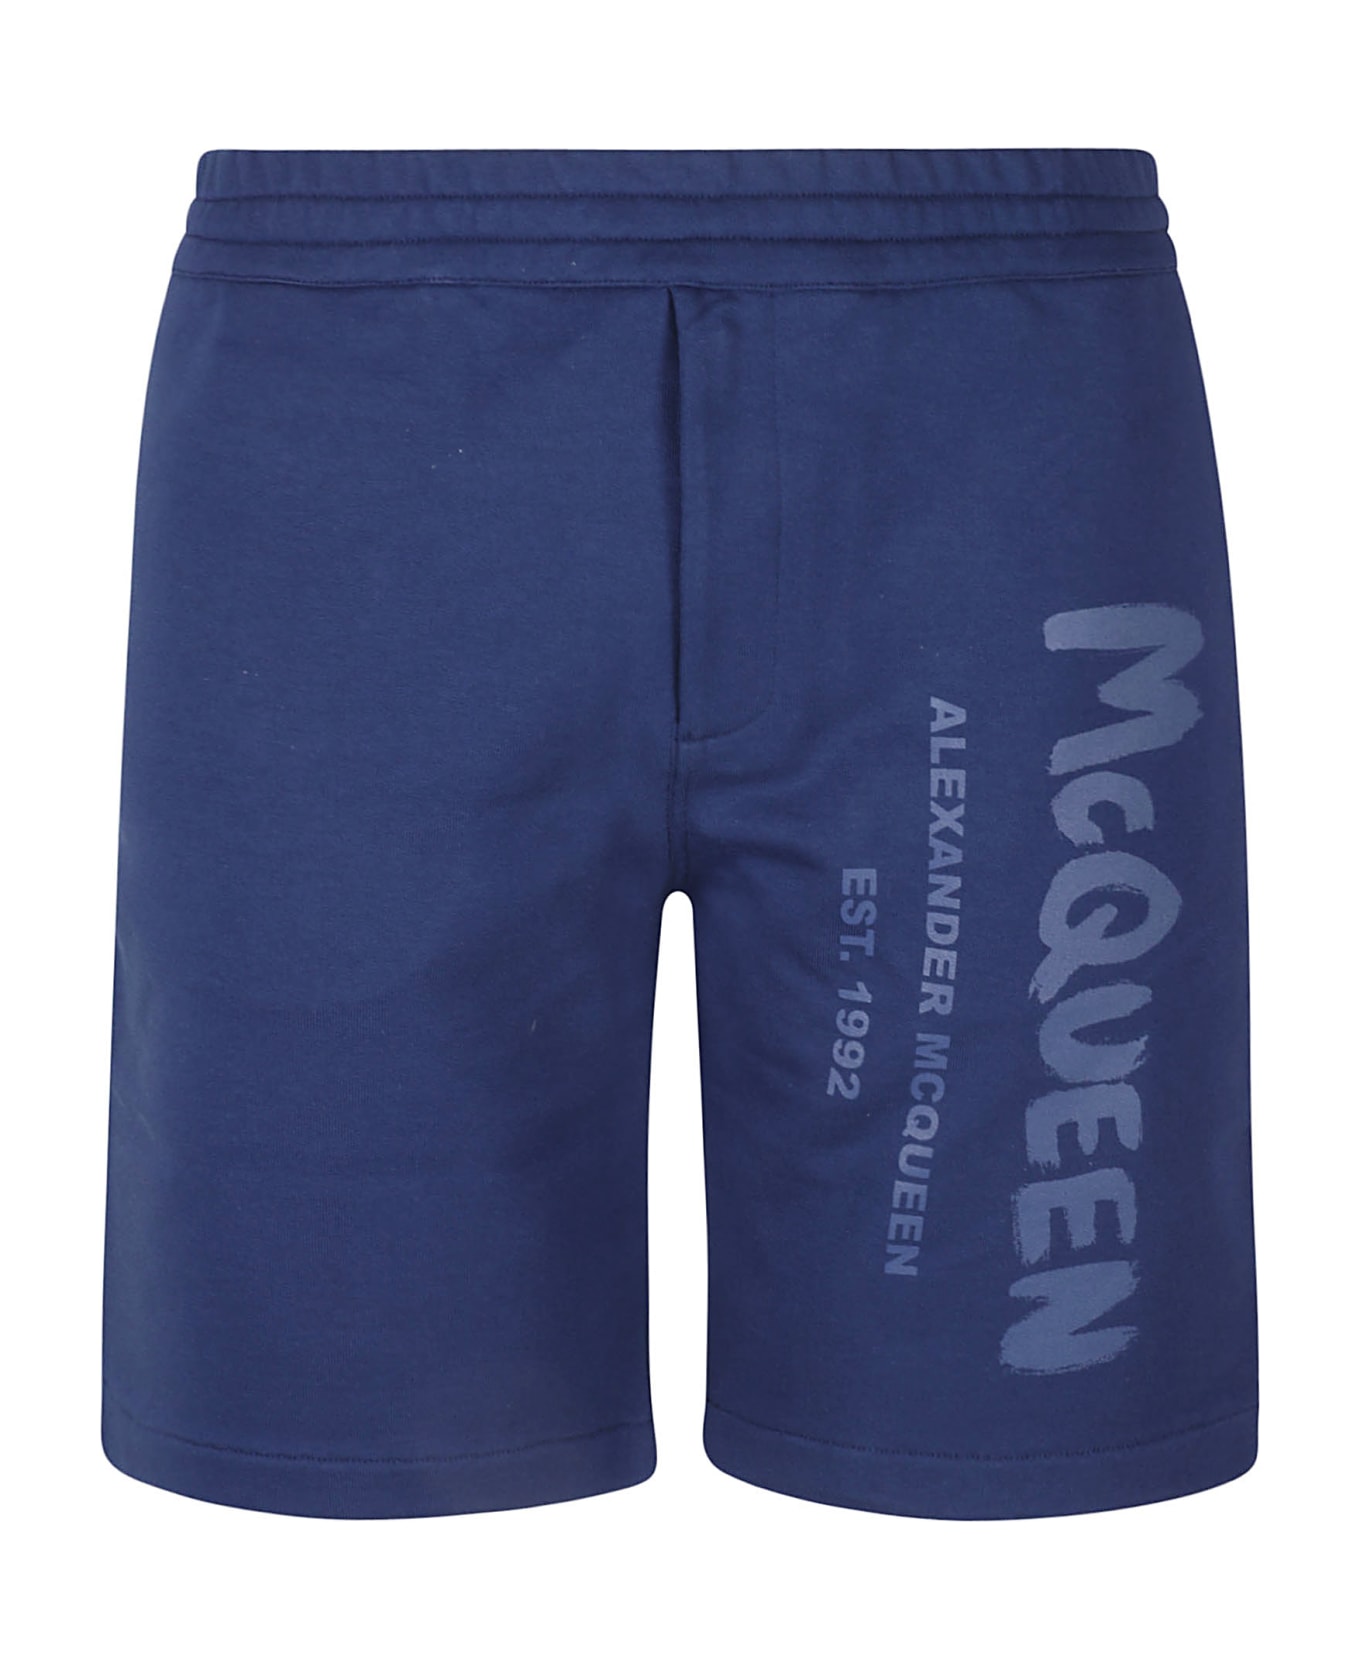 Alexander McQueen Graffiti Print Shorts - Midnight Blue/Tonal